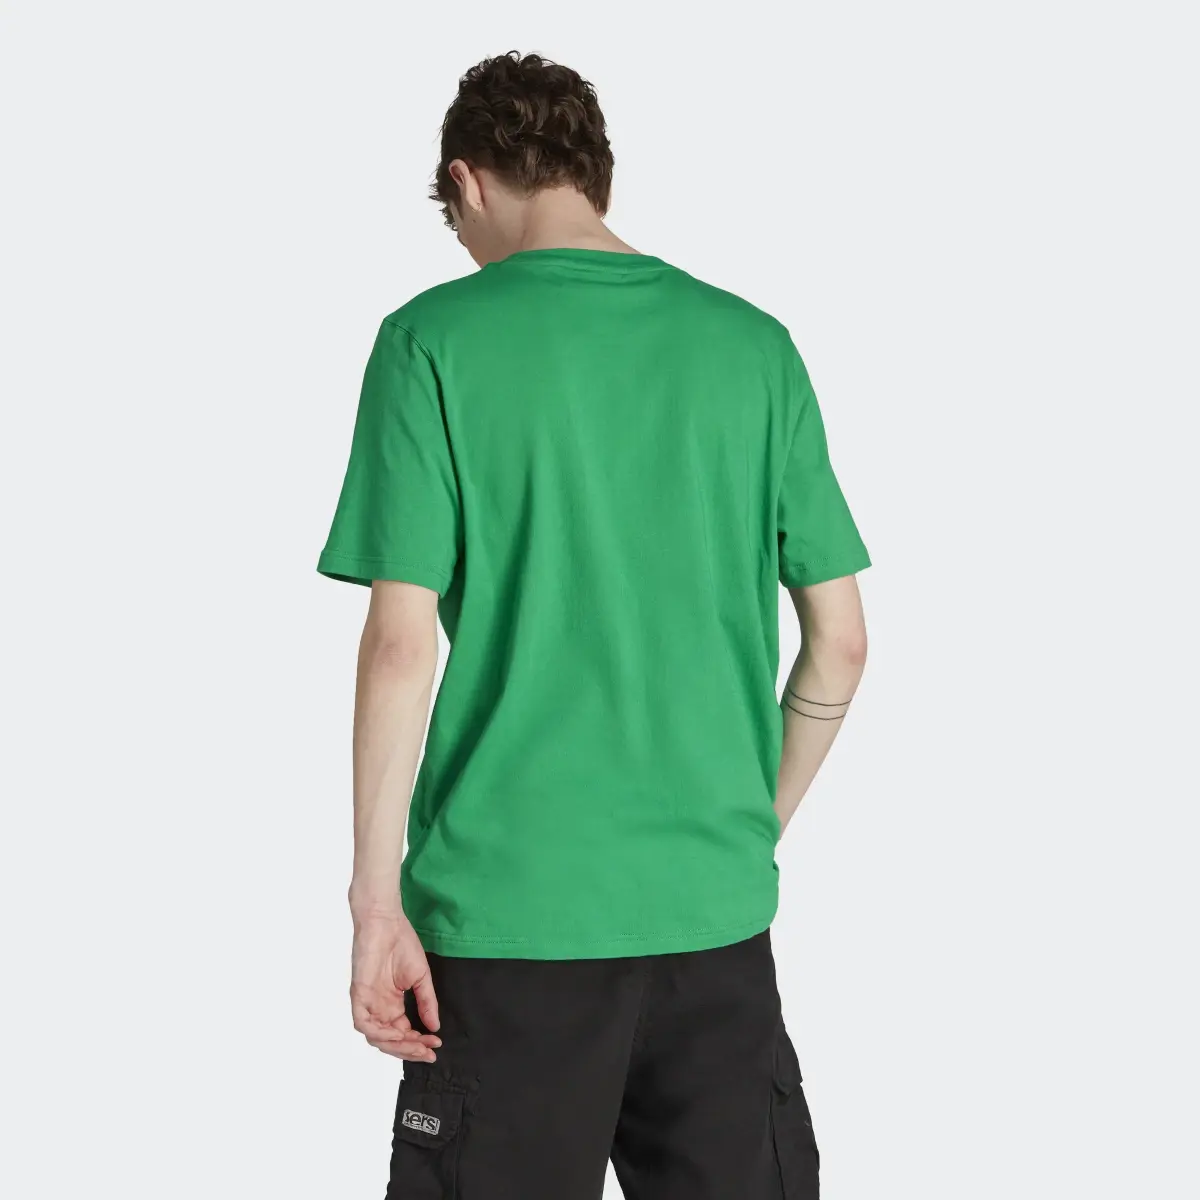 Adidas Trefoil Essentials T-Shirt. 3